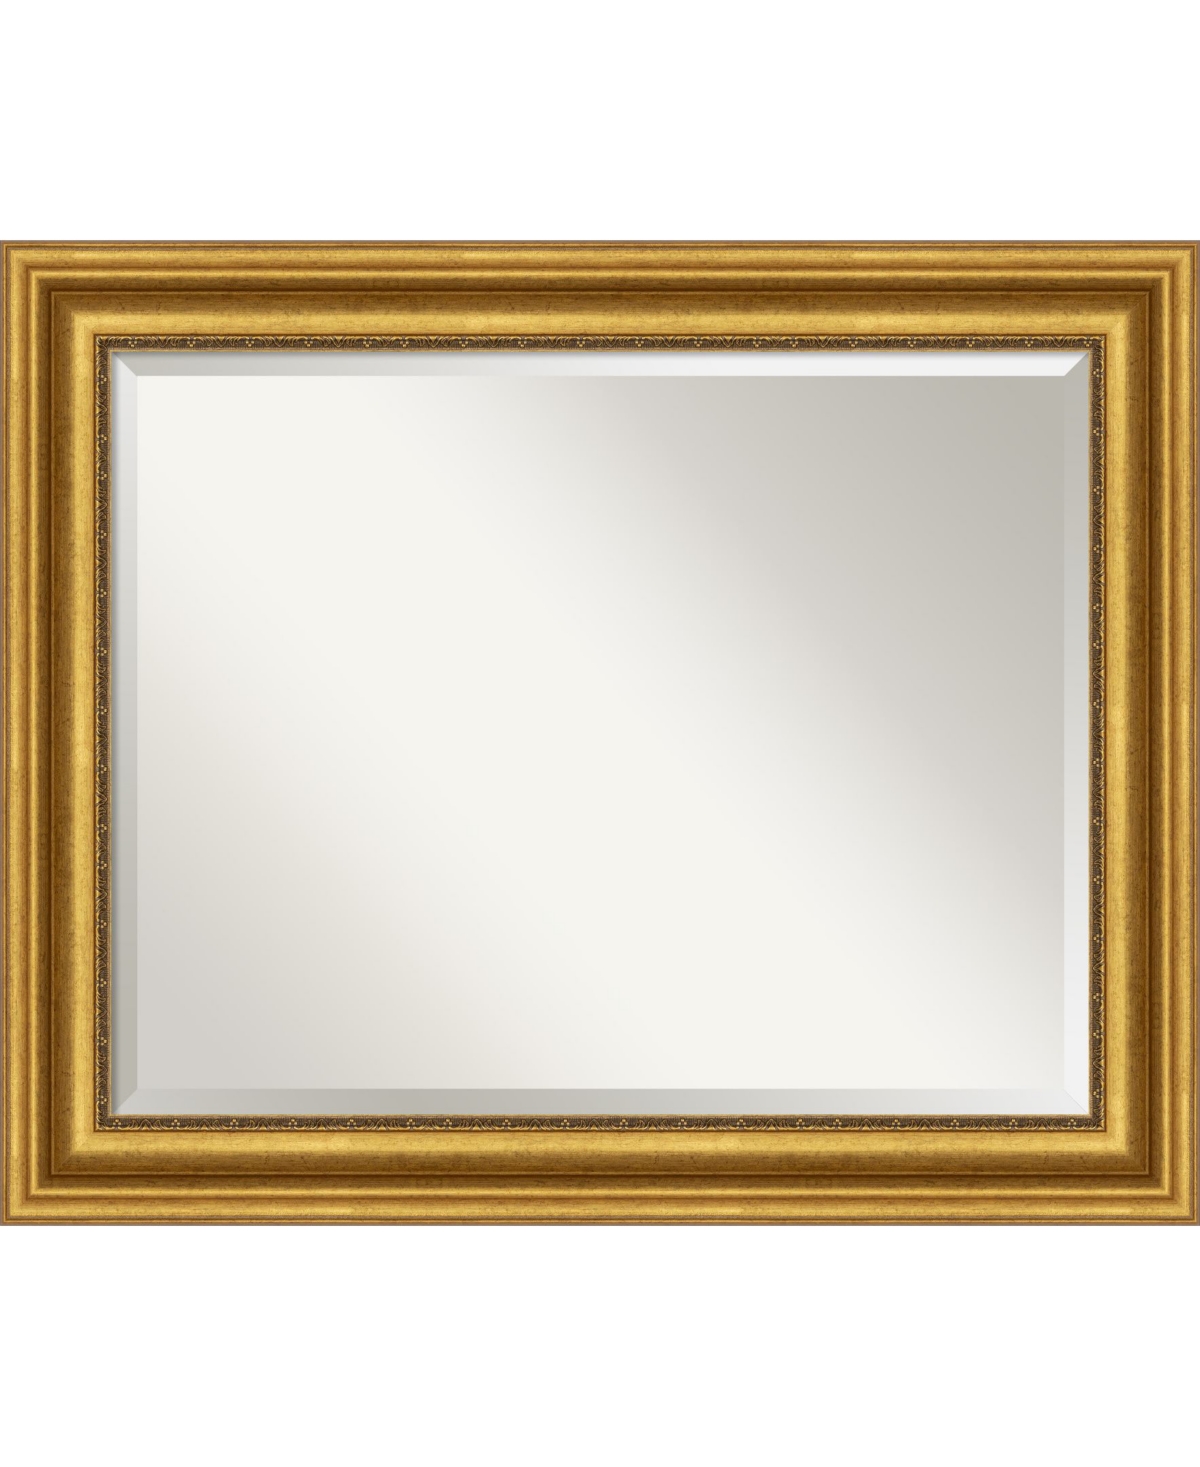 Parlor Gold-tone Framed Bathroom Vanity Wall Mirror, 33.62" x 27.62" - Gold